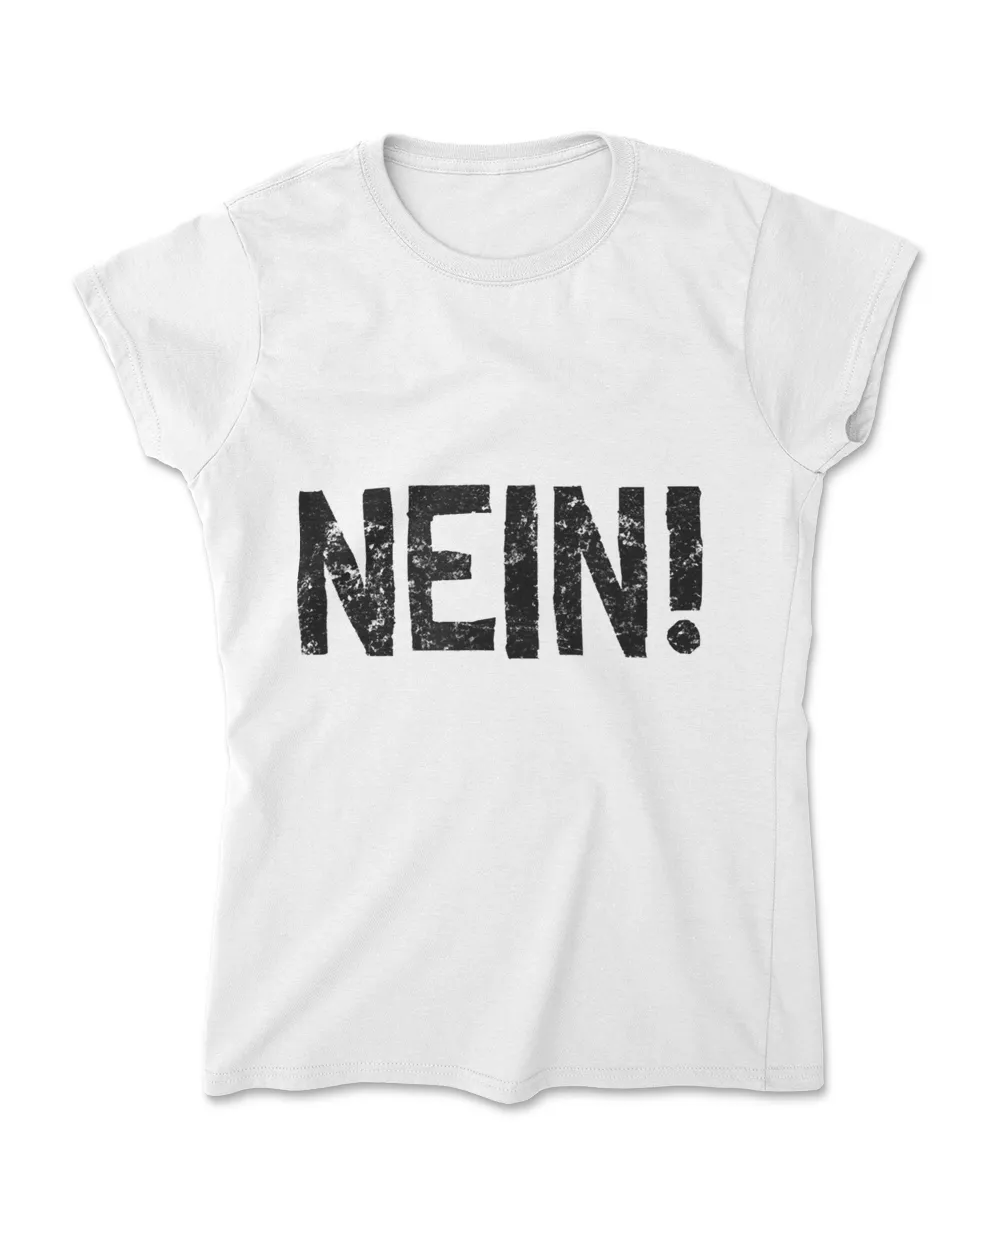 German Nein Shirt